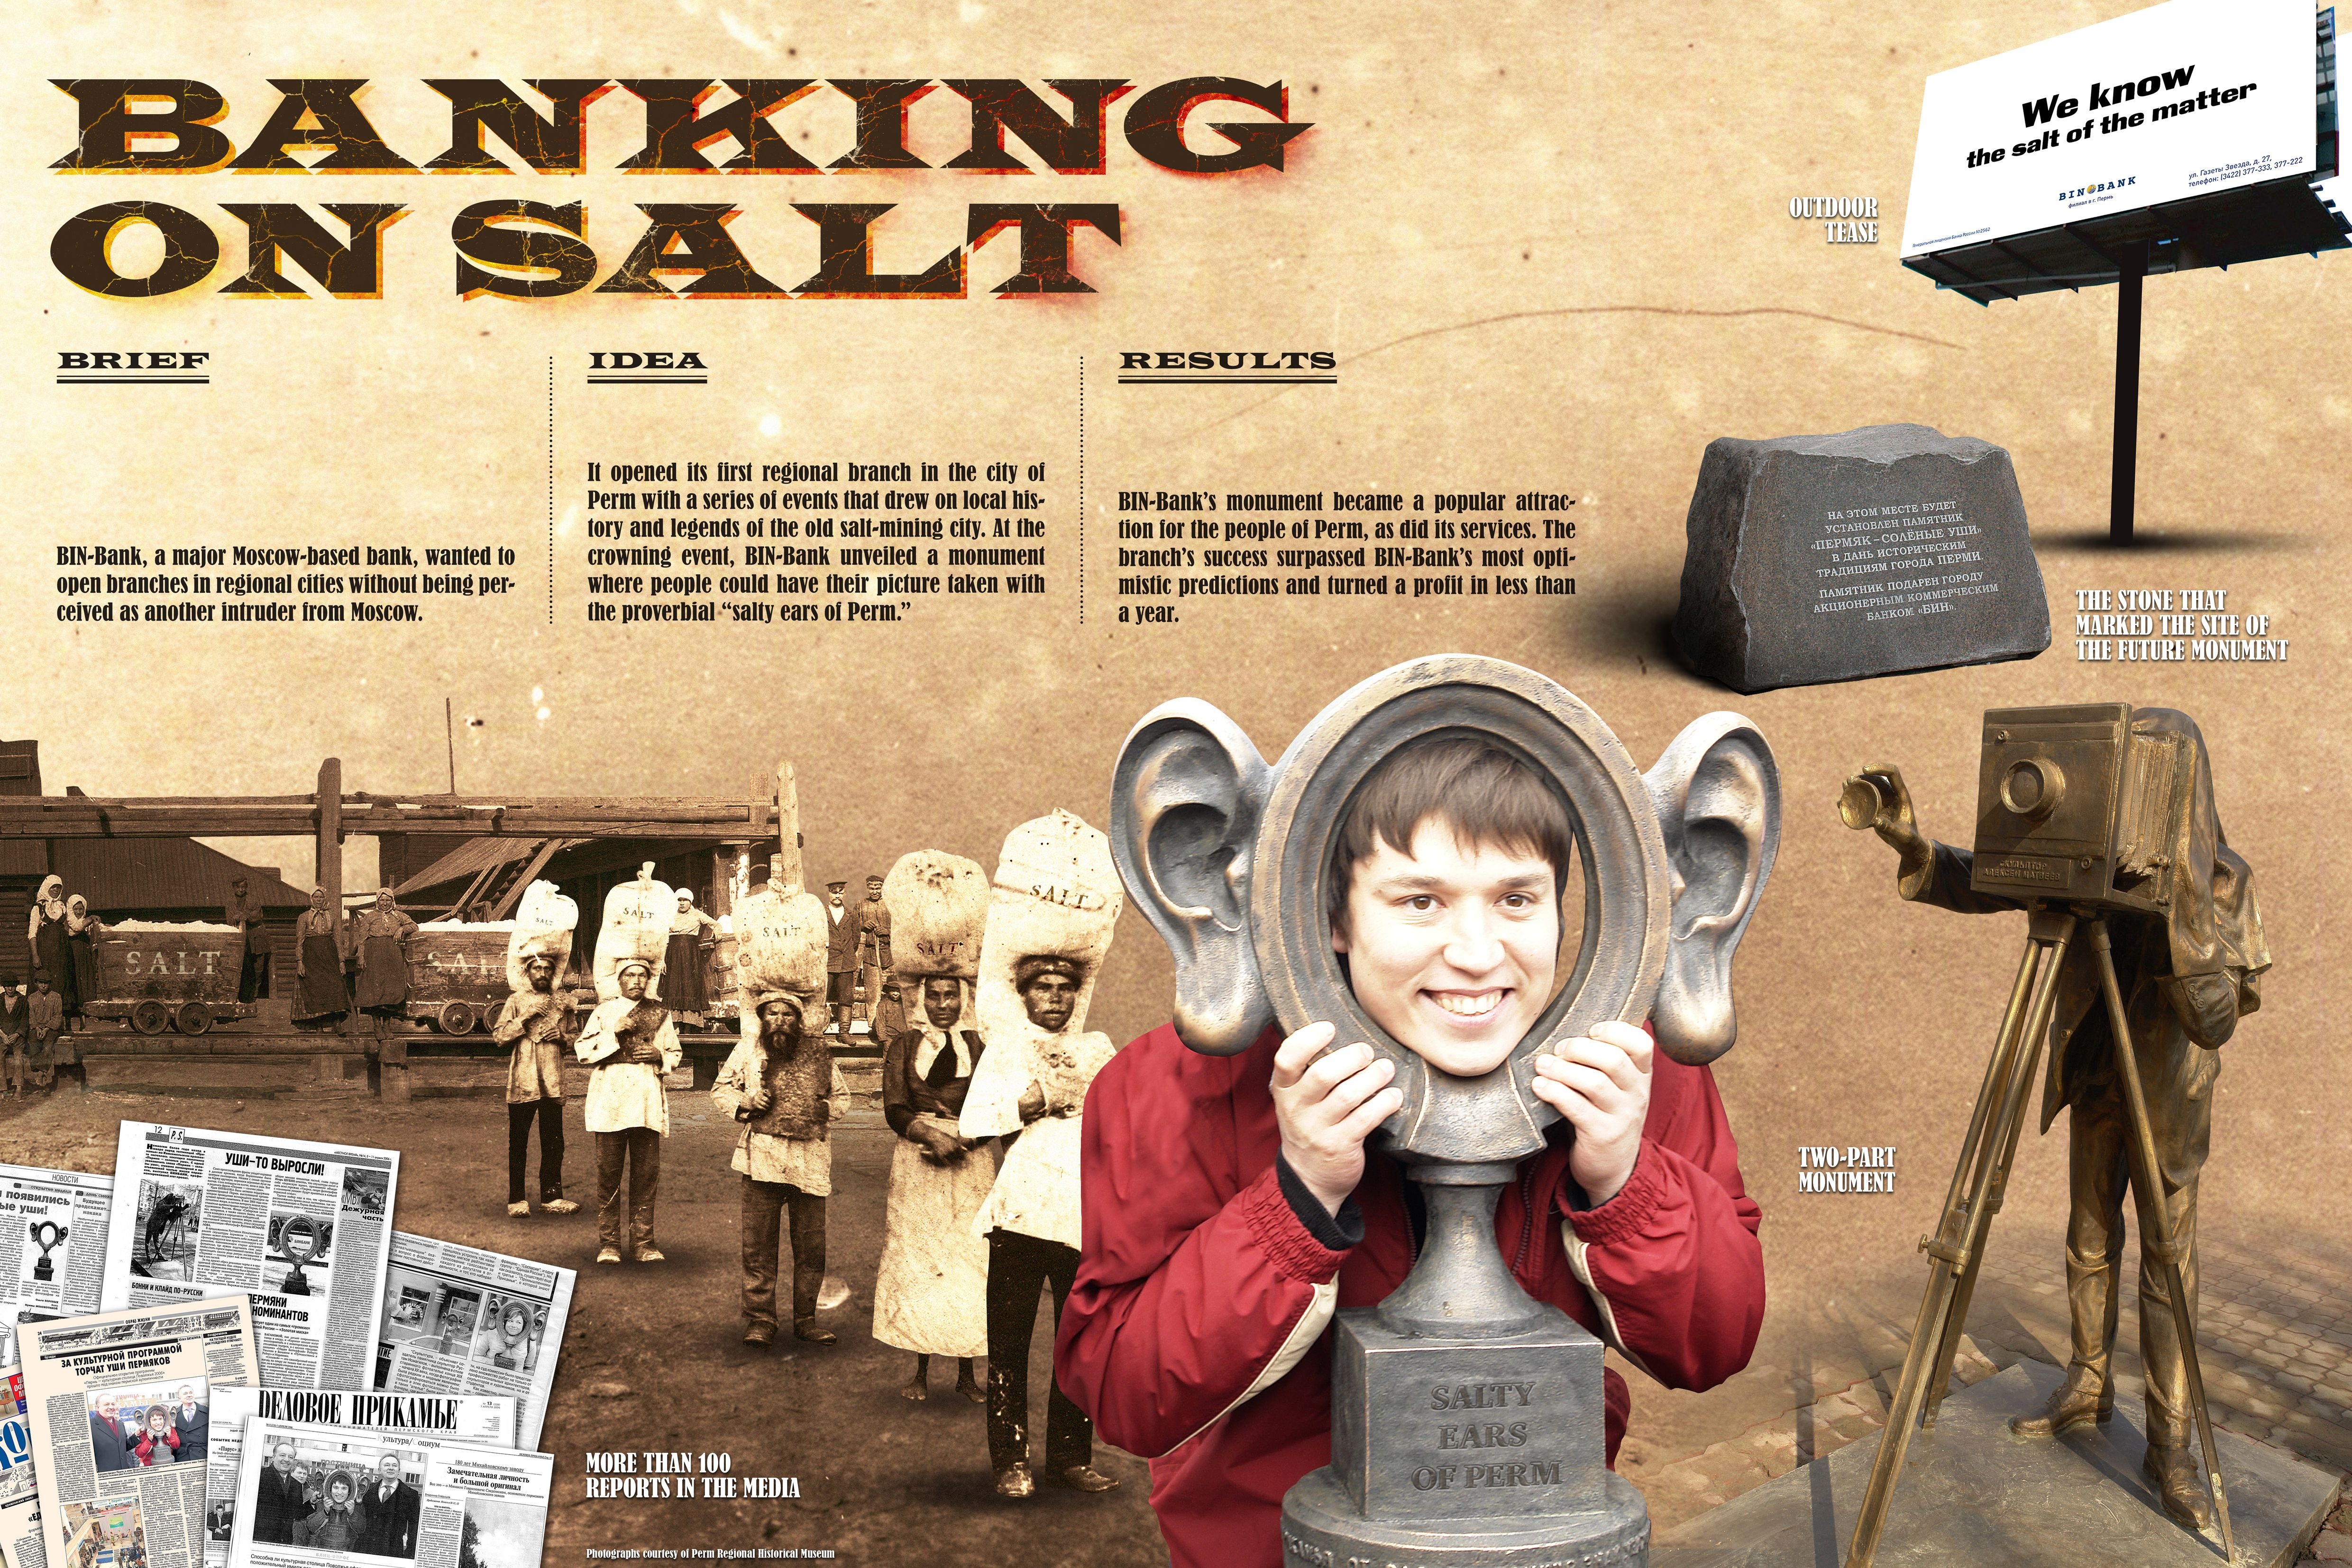 BANKING ON SALT